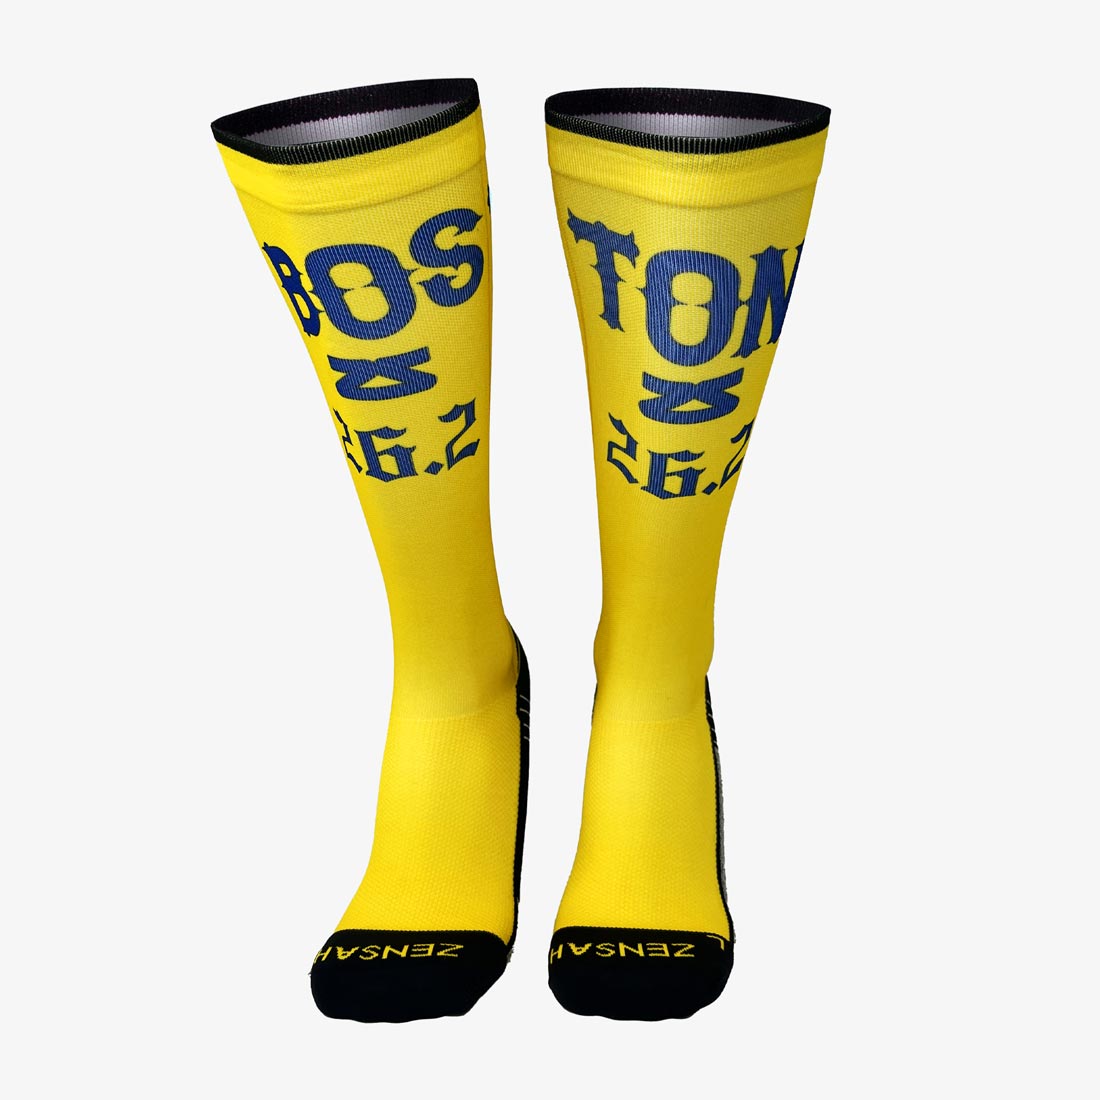 Classic Yellow Team Sock, Knee High Football Socks